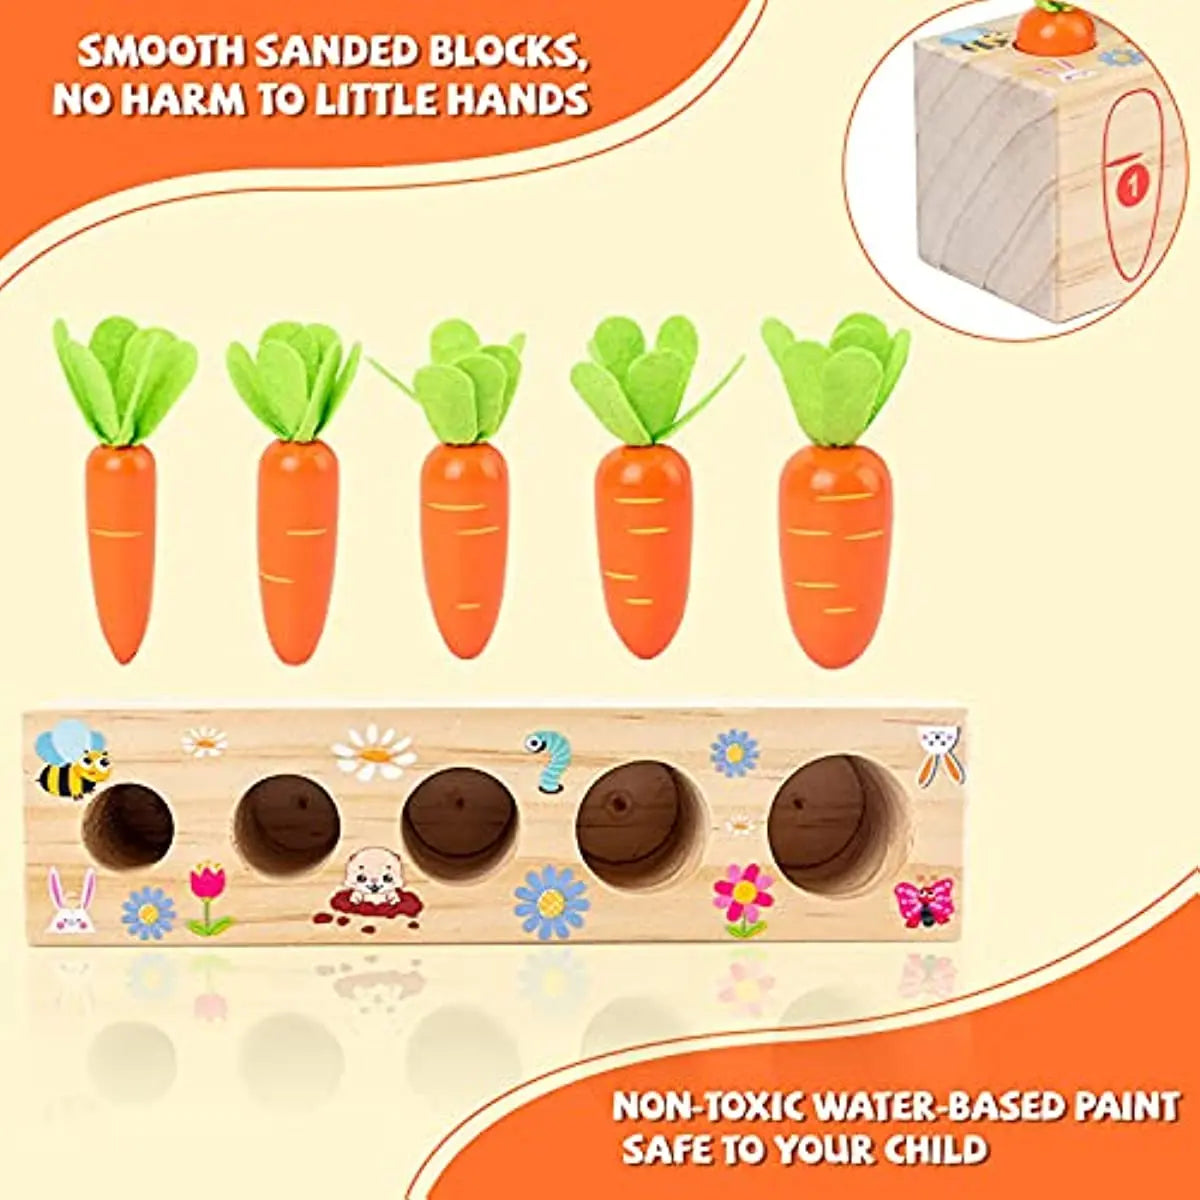 Carrot Pull Game Montessori